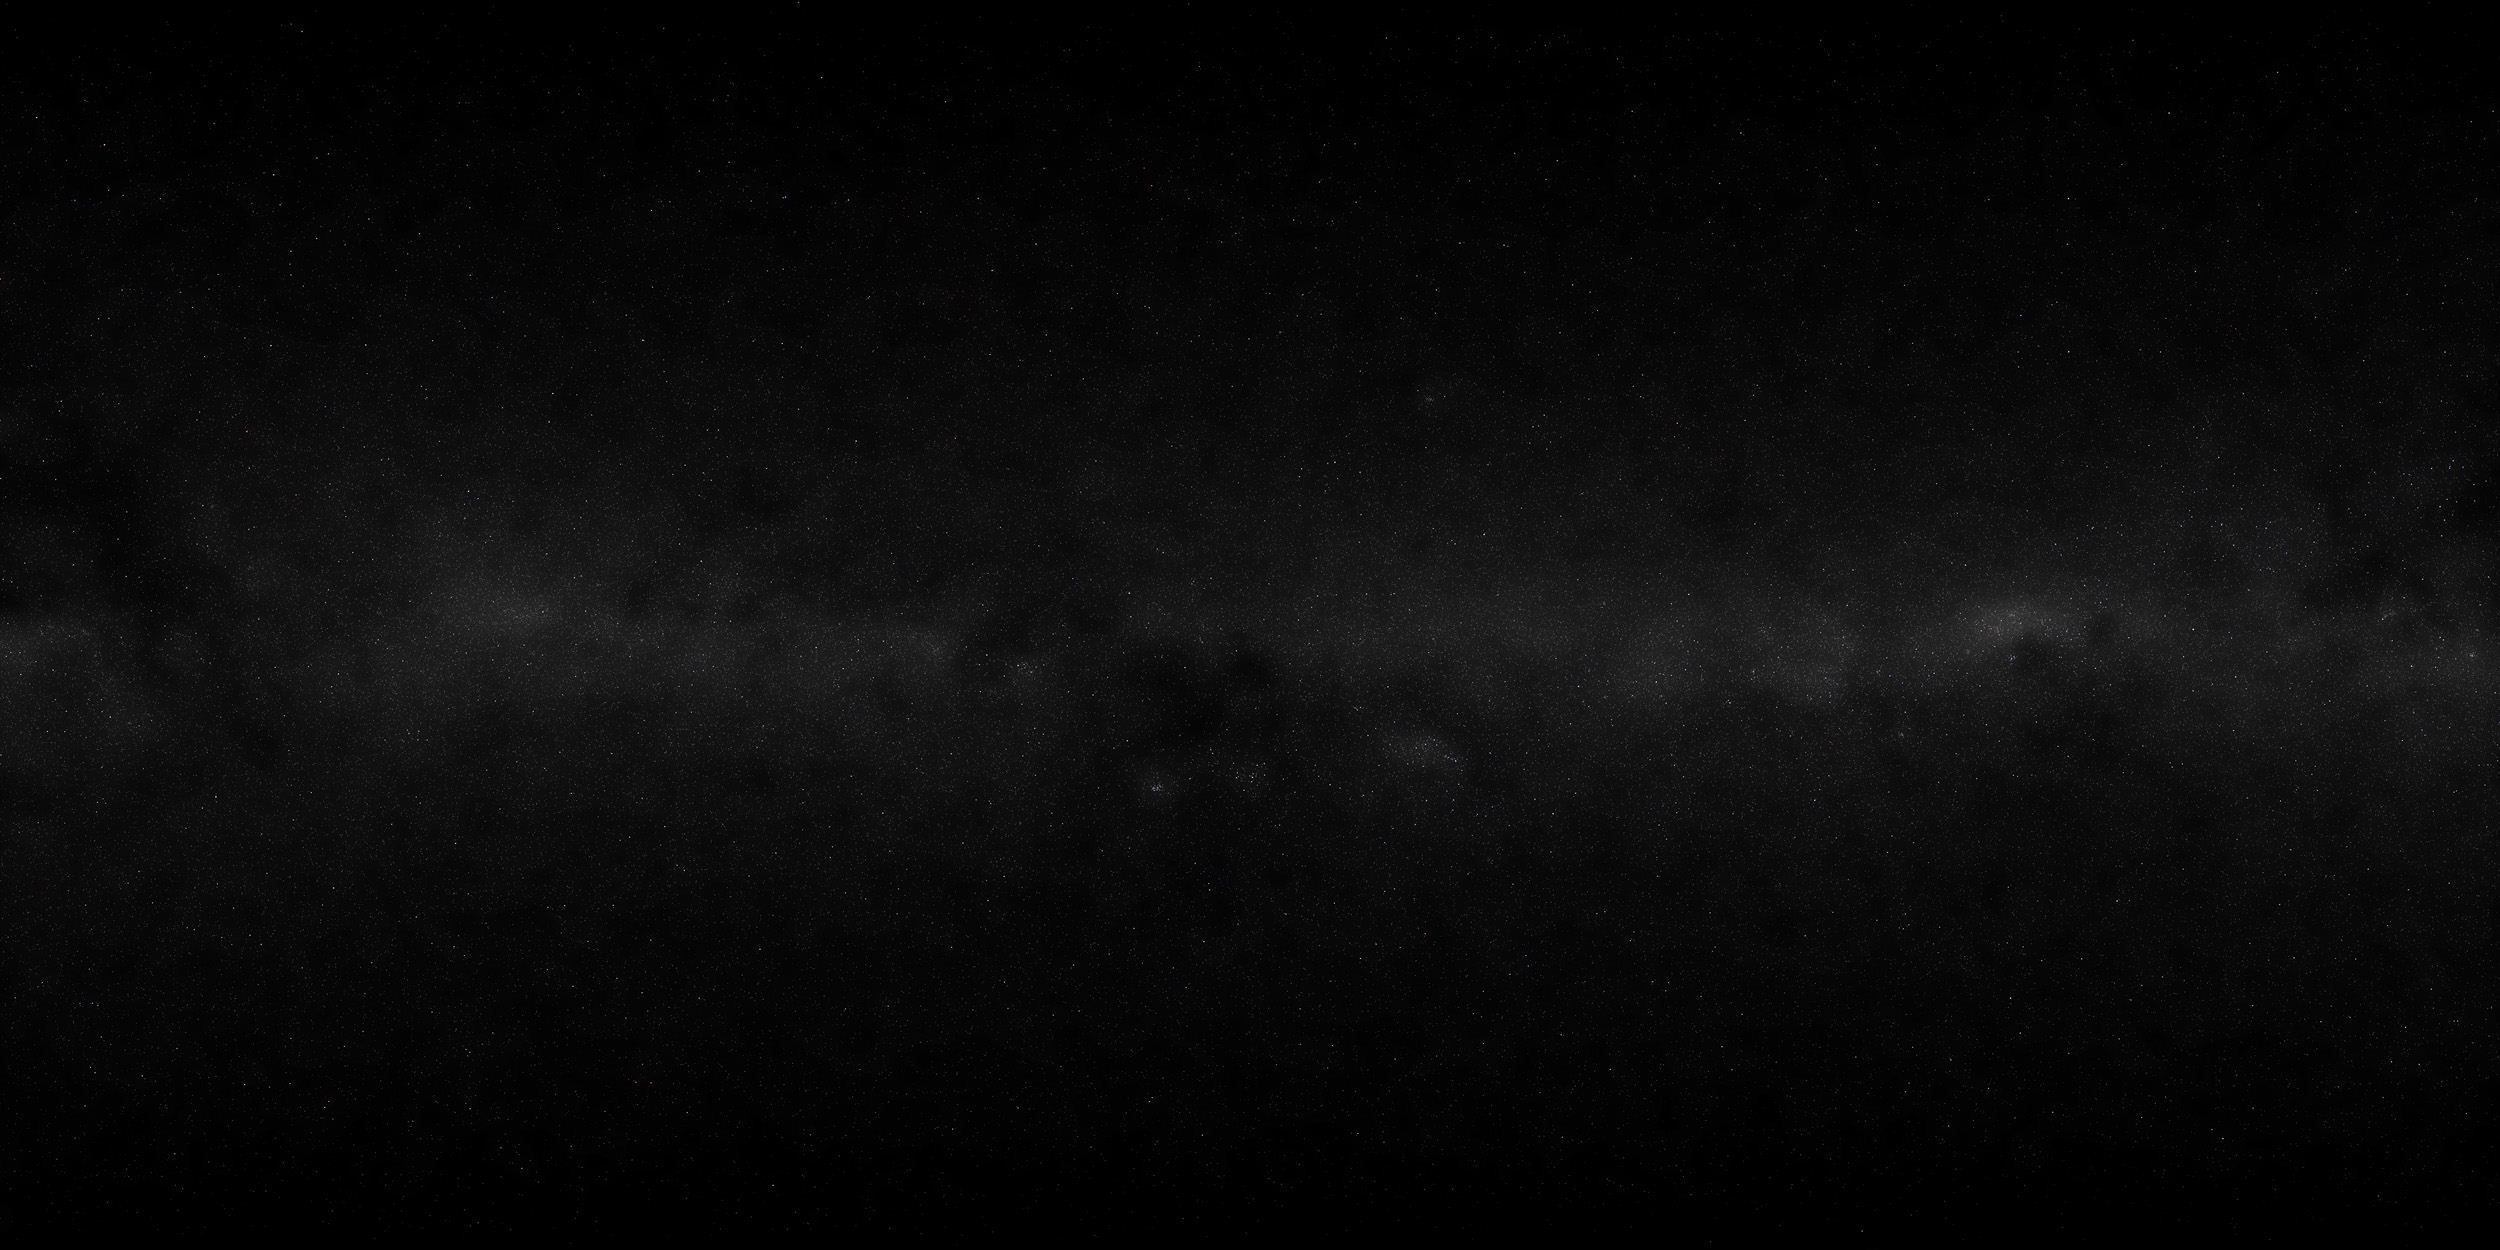 Dark Space Backgrounds